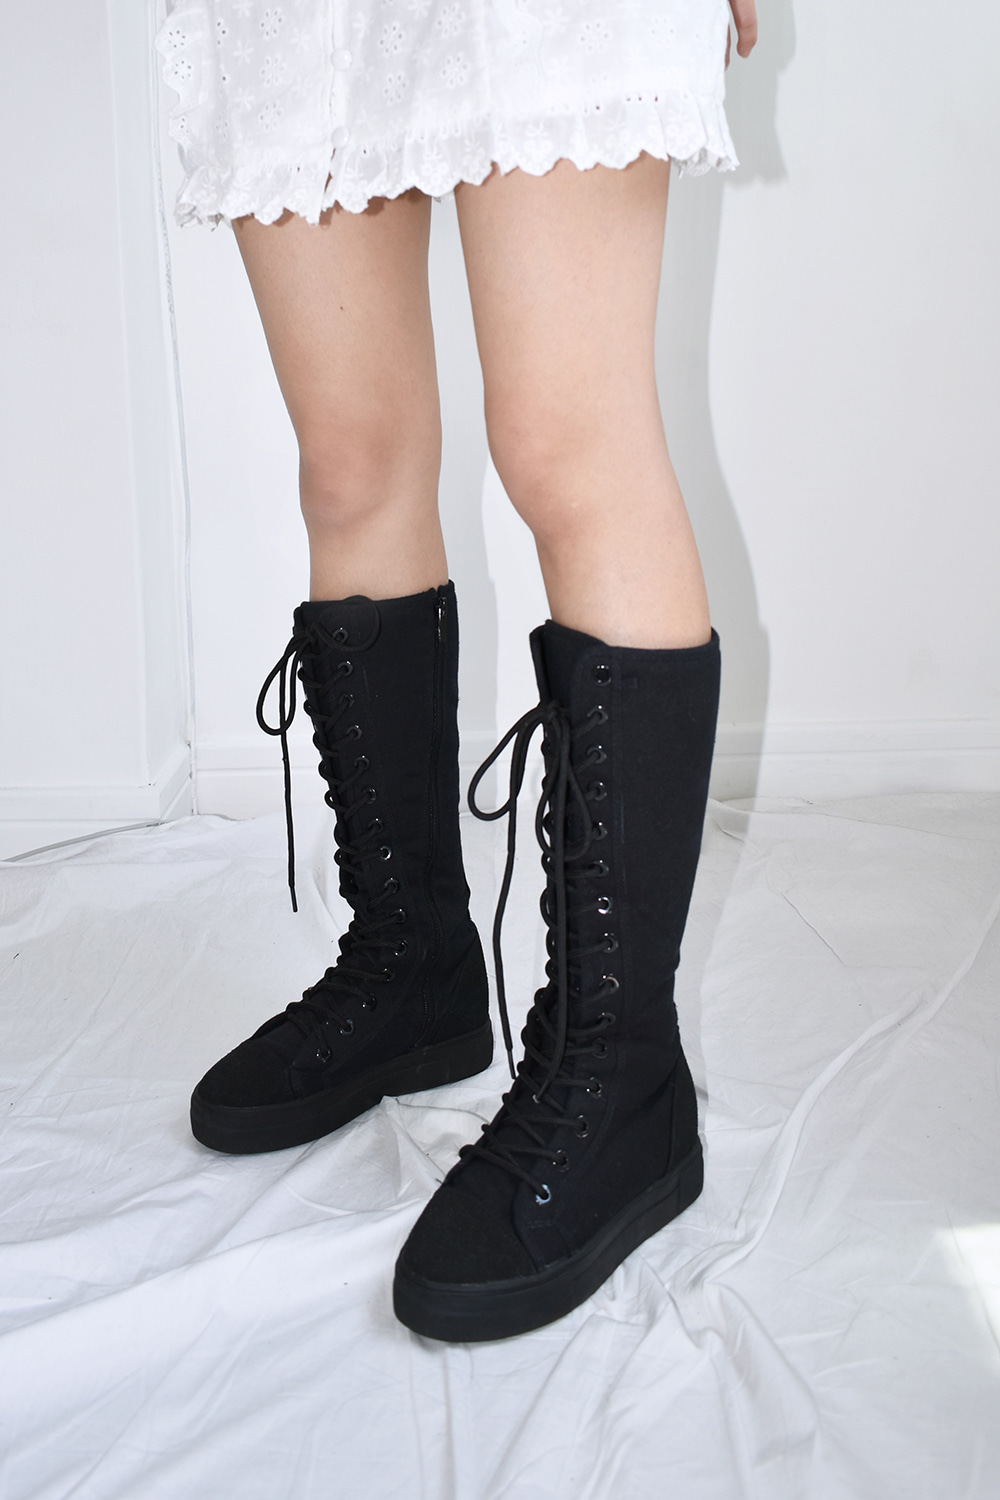 low strap boots (베스트 상품 재입고♥)